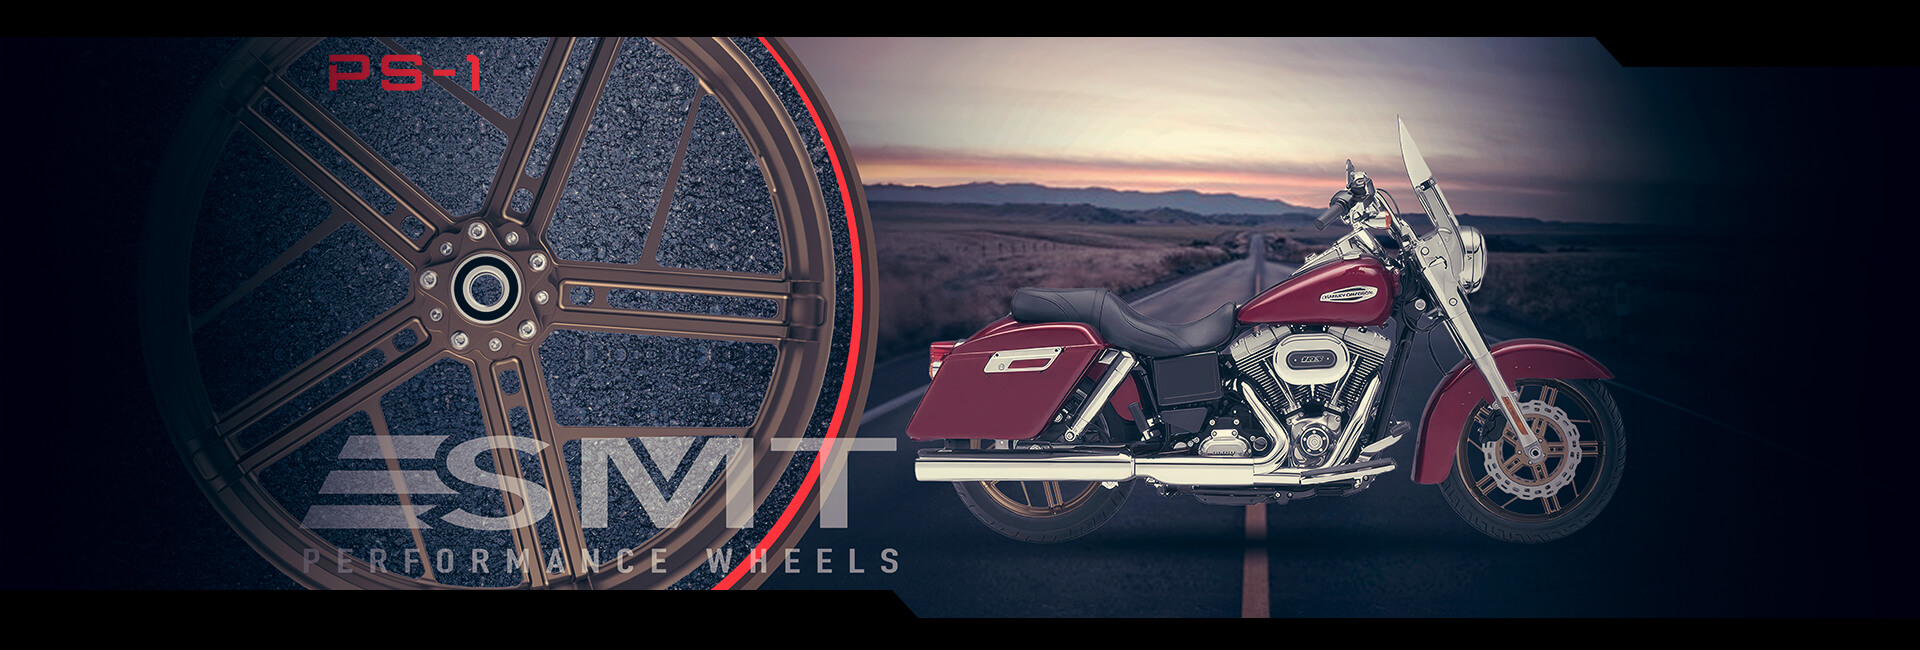 Custom Harley Switchback Wheels From SMT